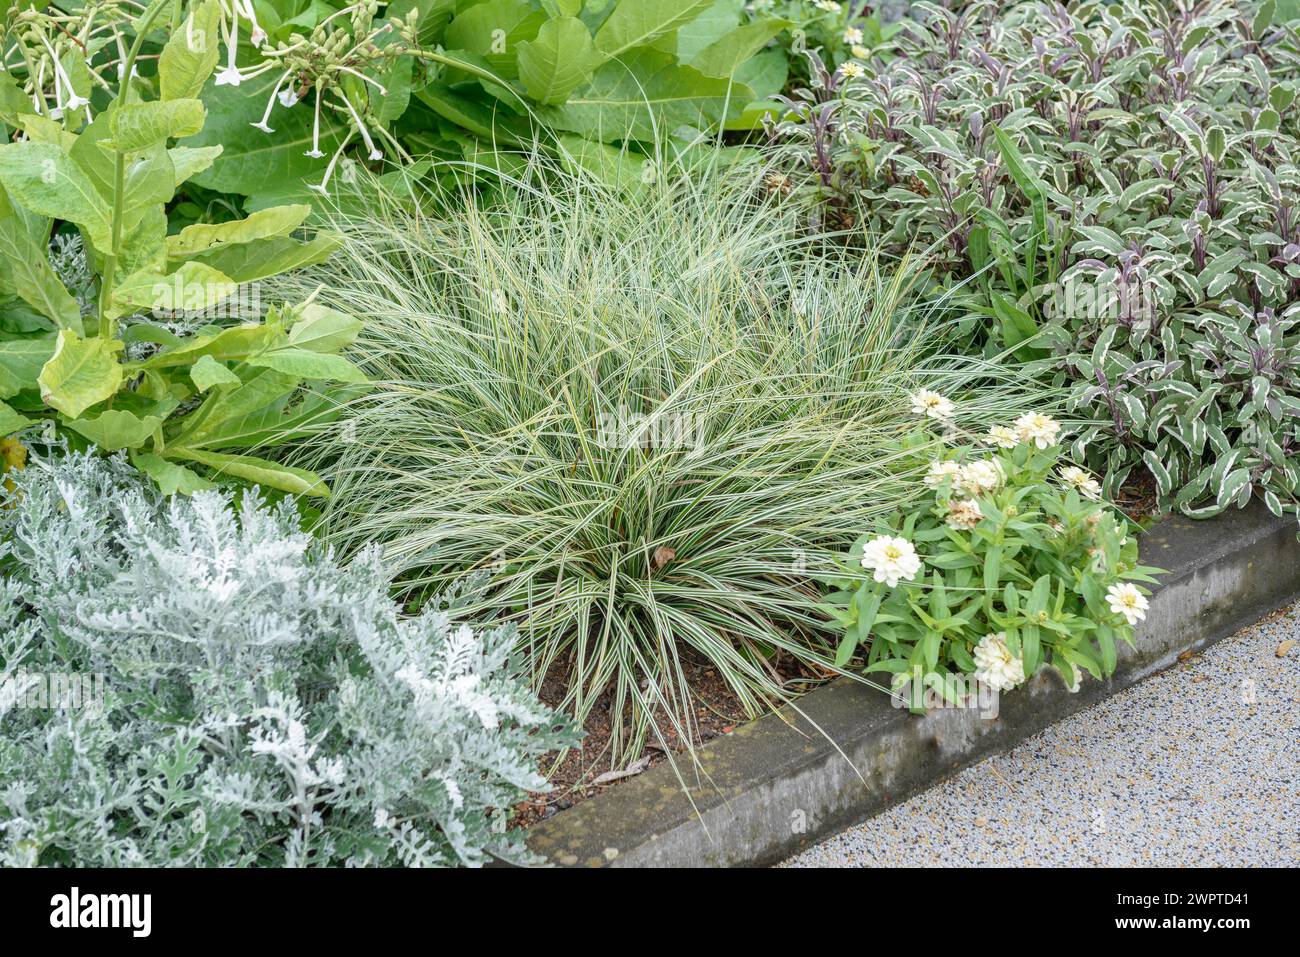 Japanese sedge (Carex oshimensis EVEREST), Federal Garden Show Havelregion 2015, Rathenow, Brandenburg, Germany Stock Photo